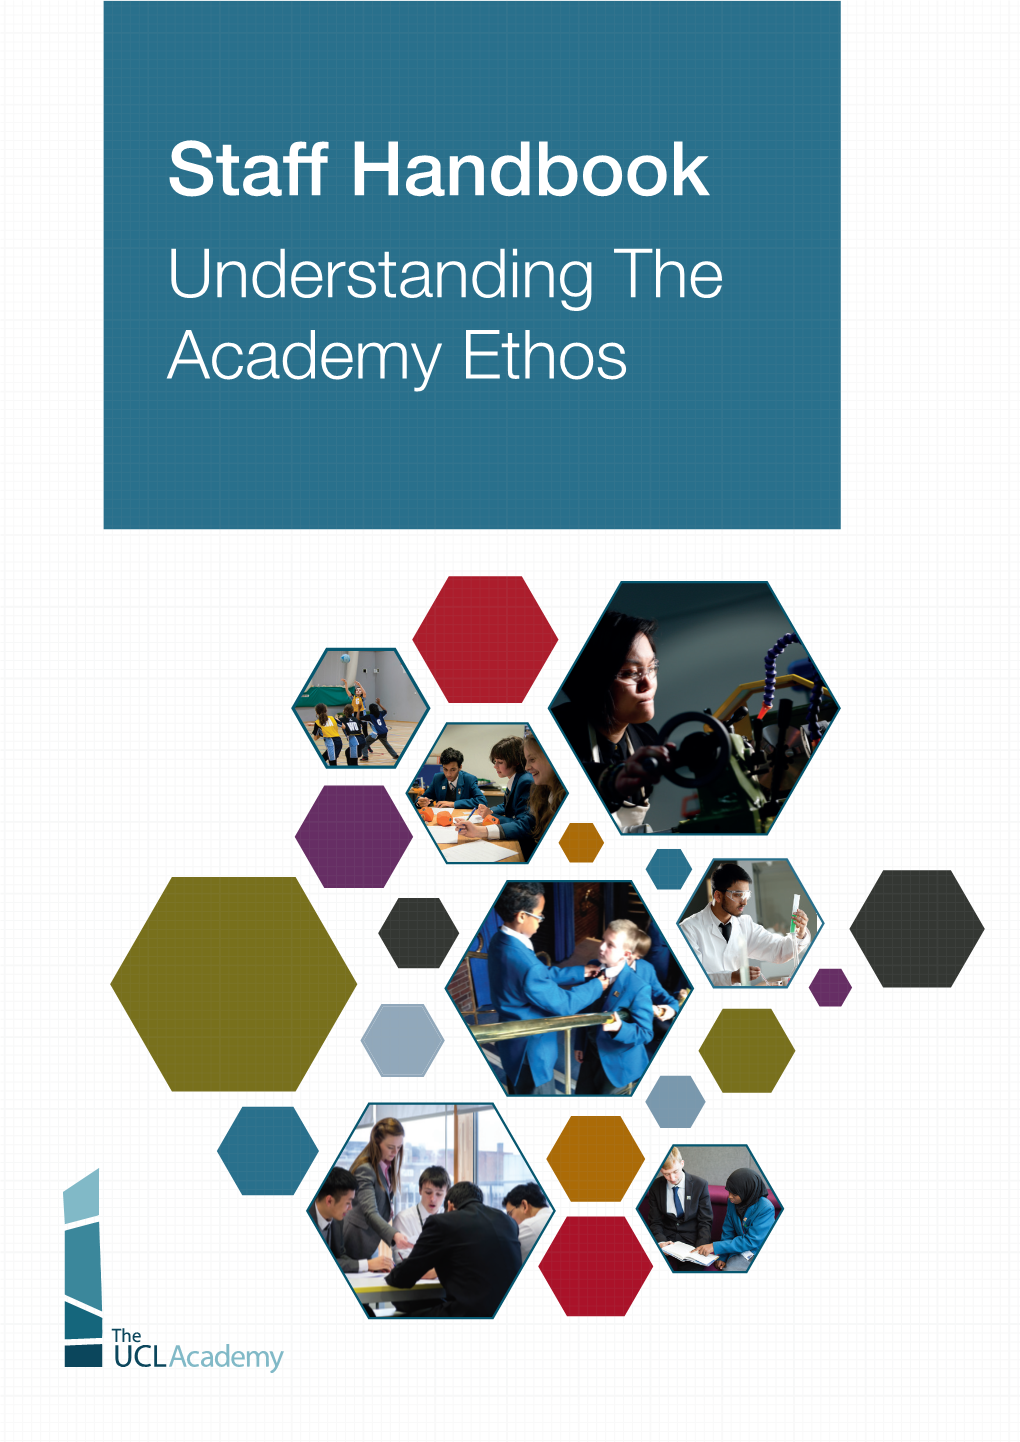 Staff Handbook Understanding the Academy Ethos